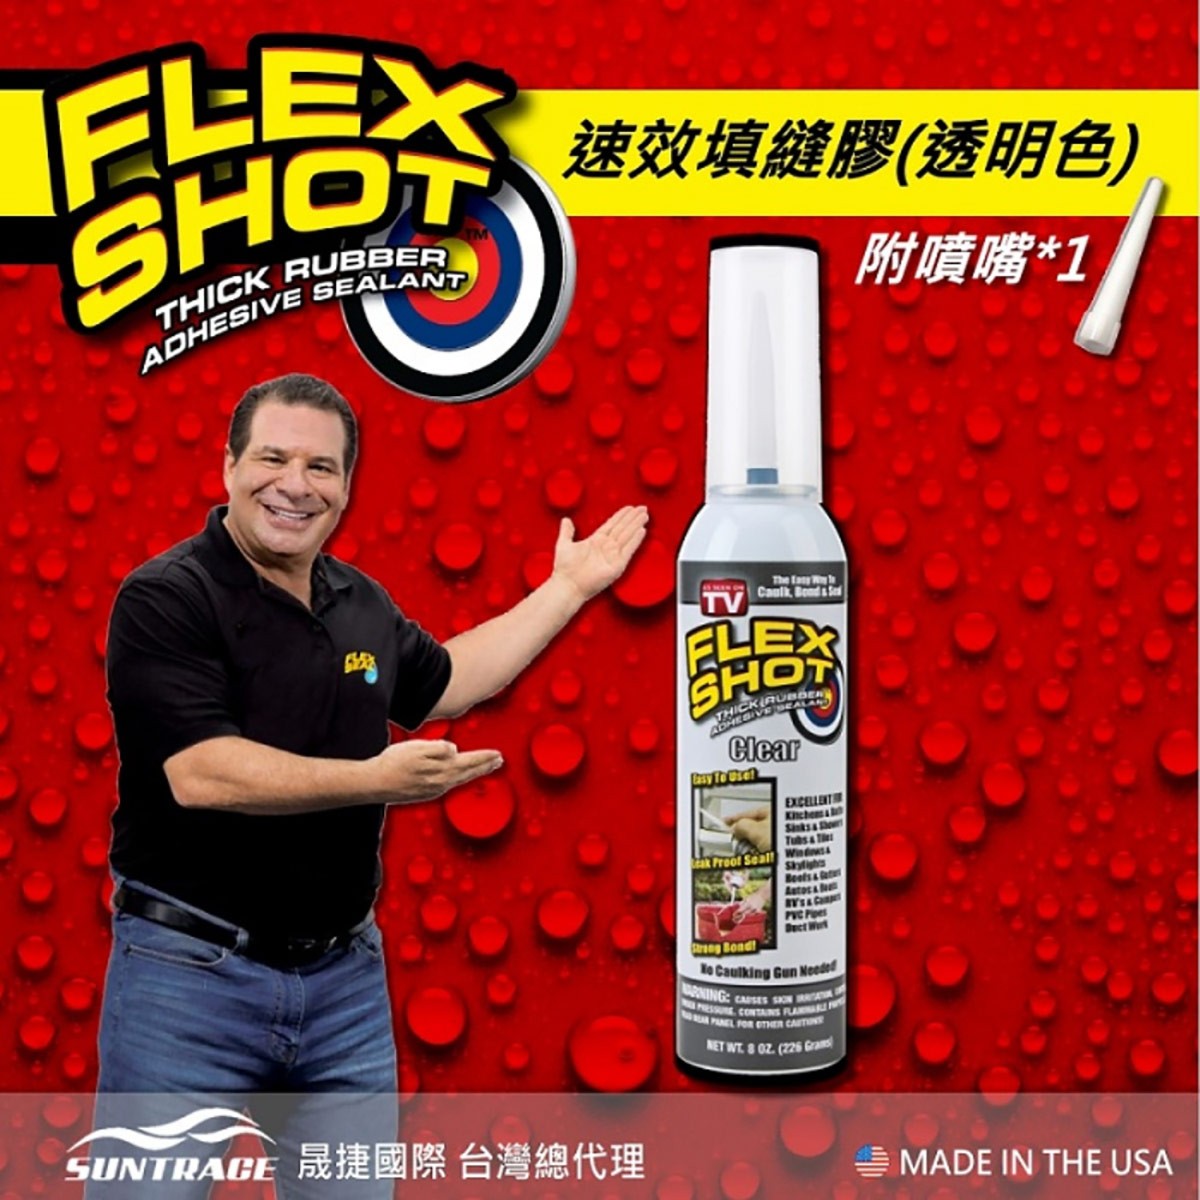 FLEX SHOT 速效填縫膠-透明色，固化乾燥後呈彈性橡膠，具伸展彈性。